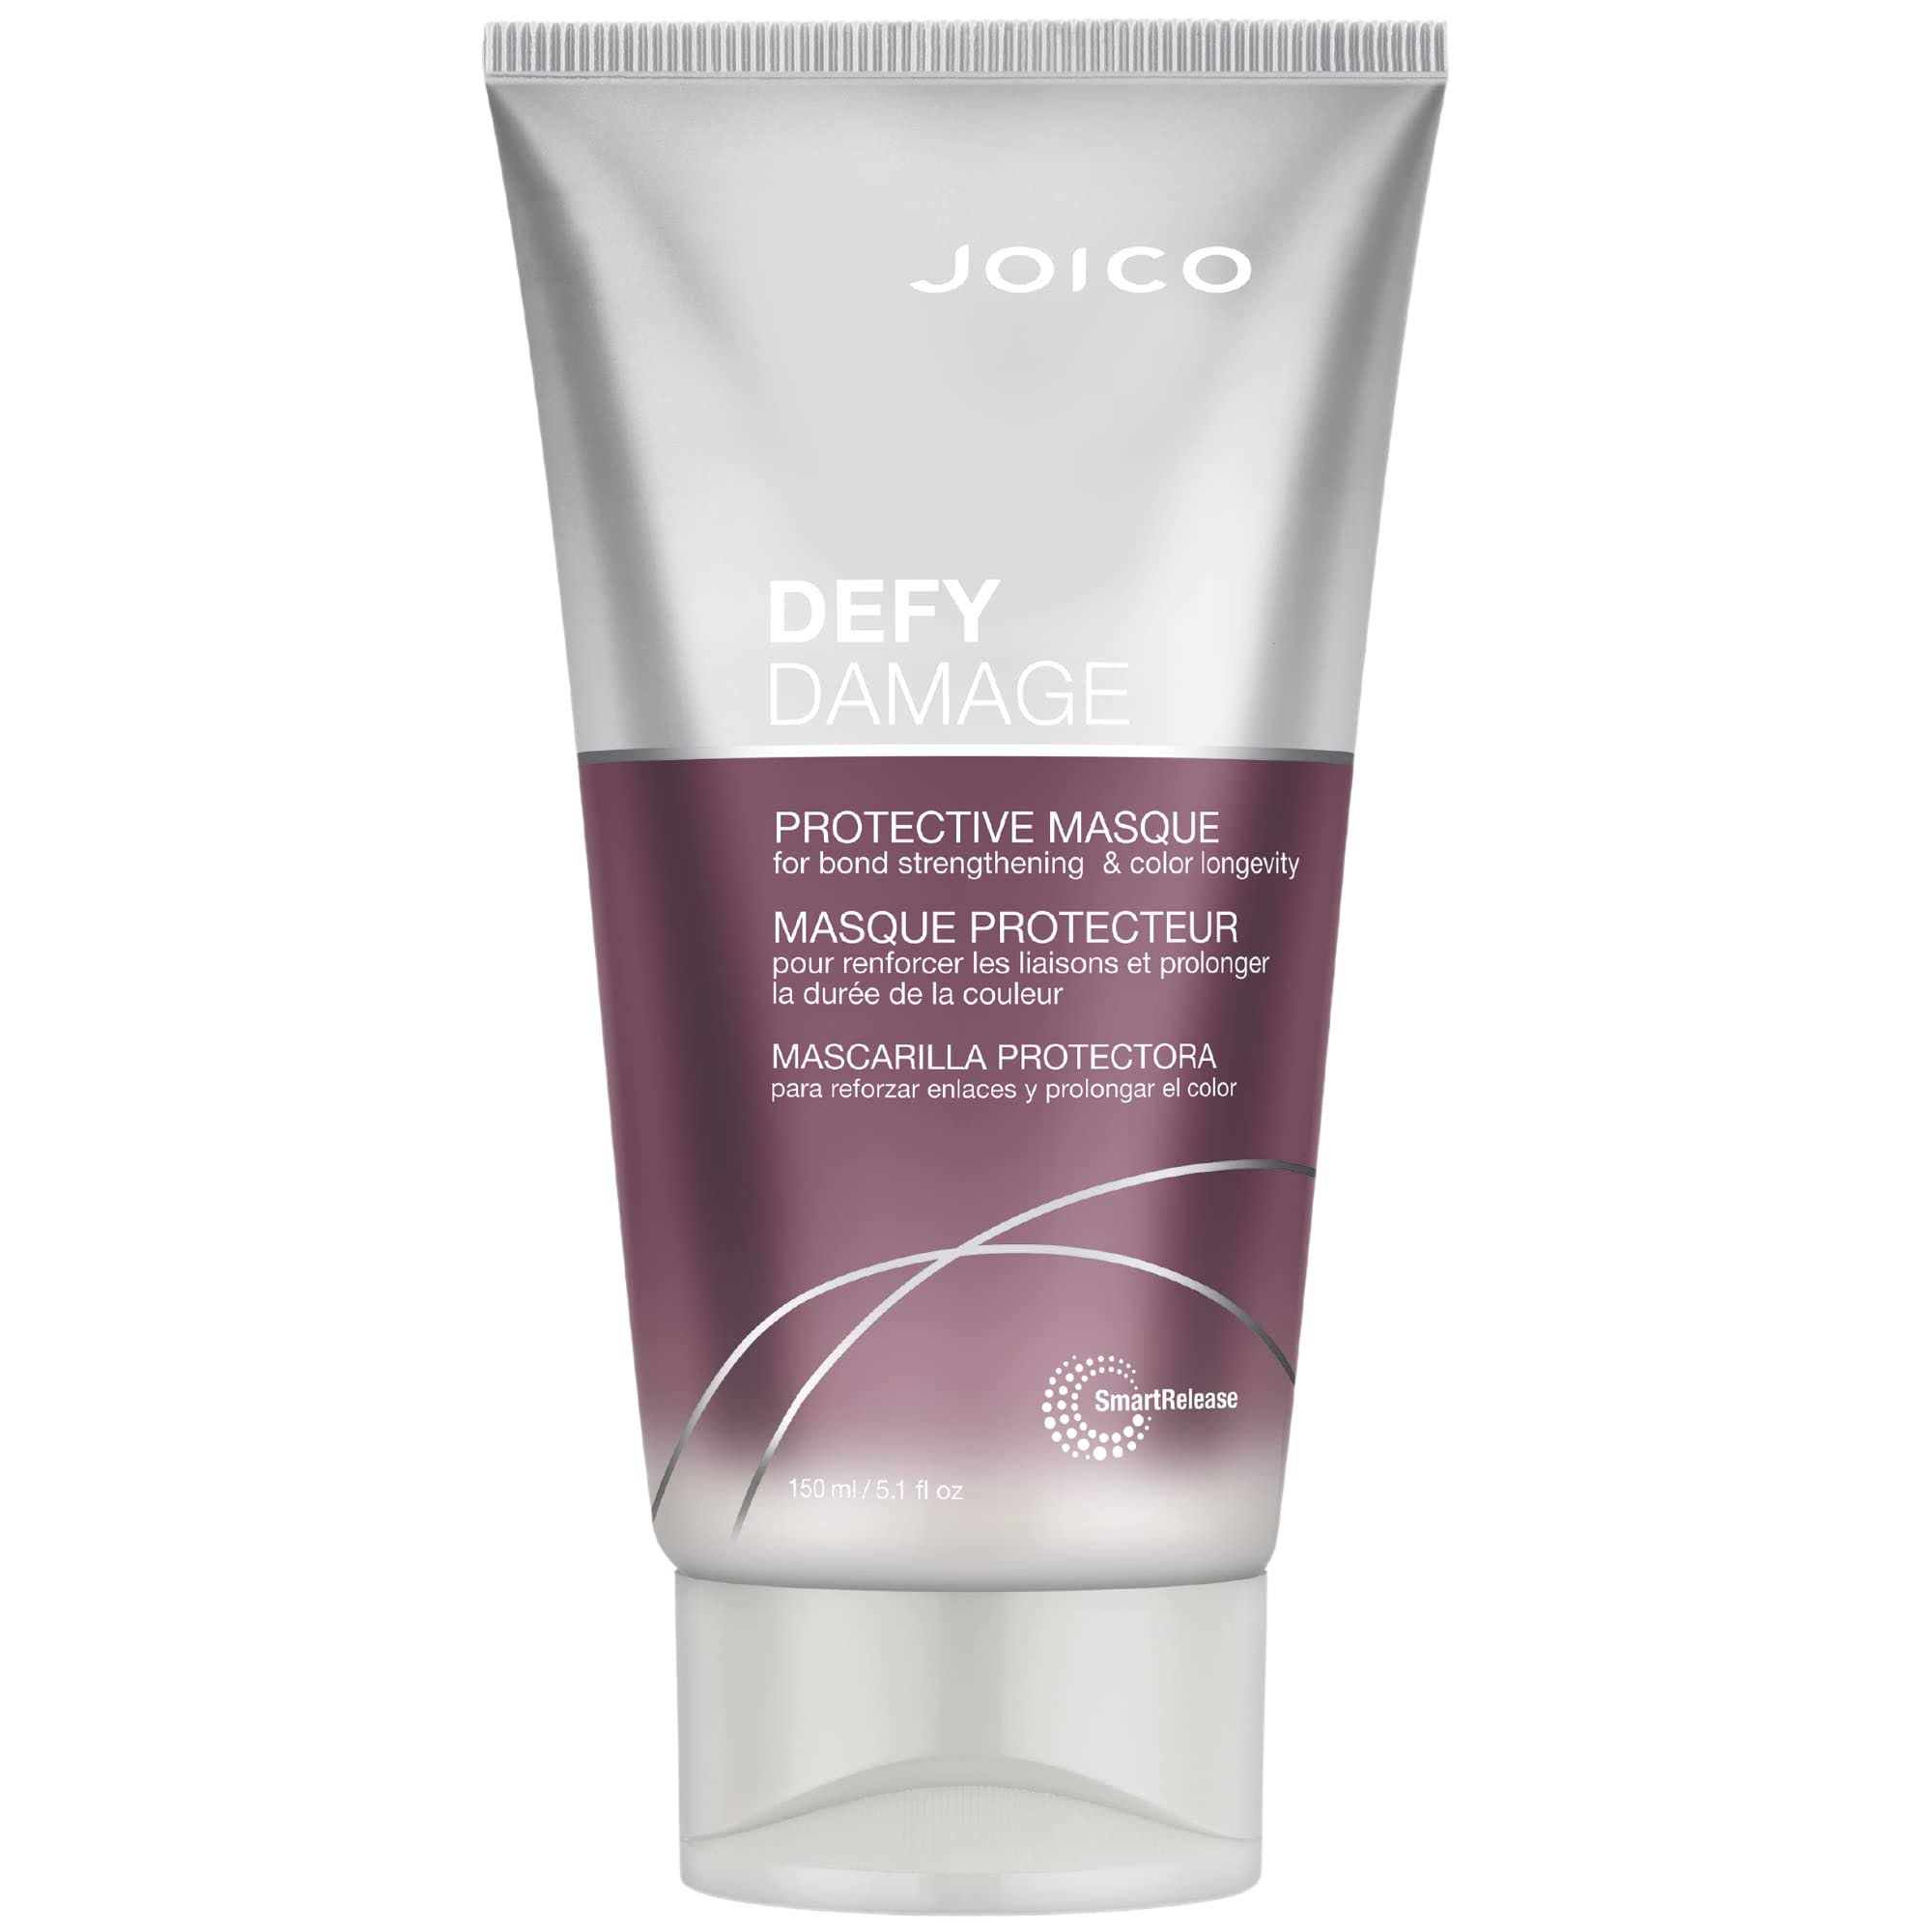 Joico Defy Damage Protective Masque, 150 ml